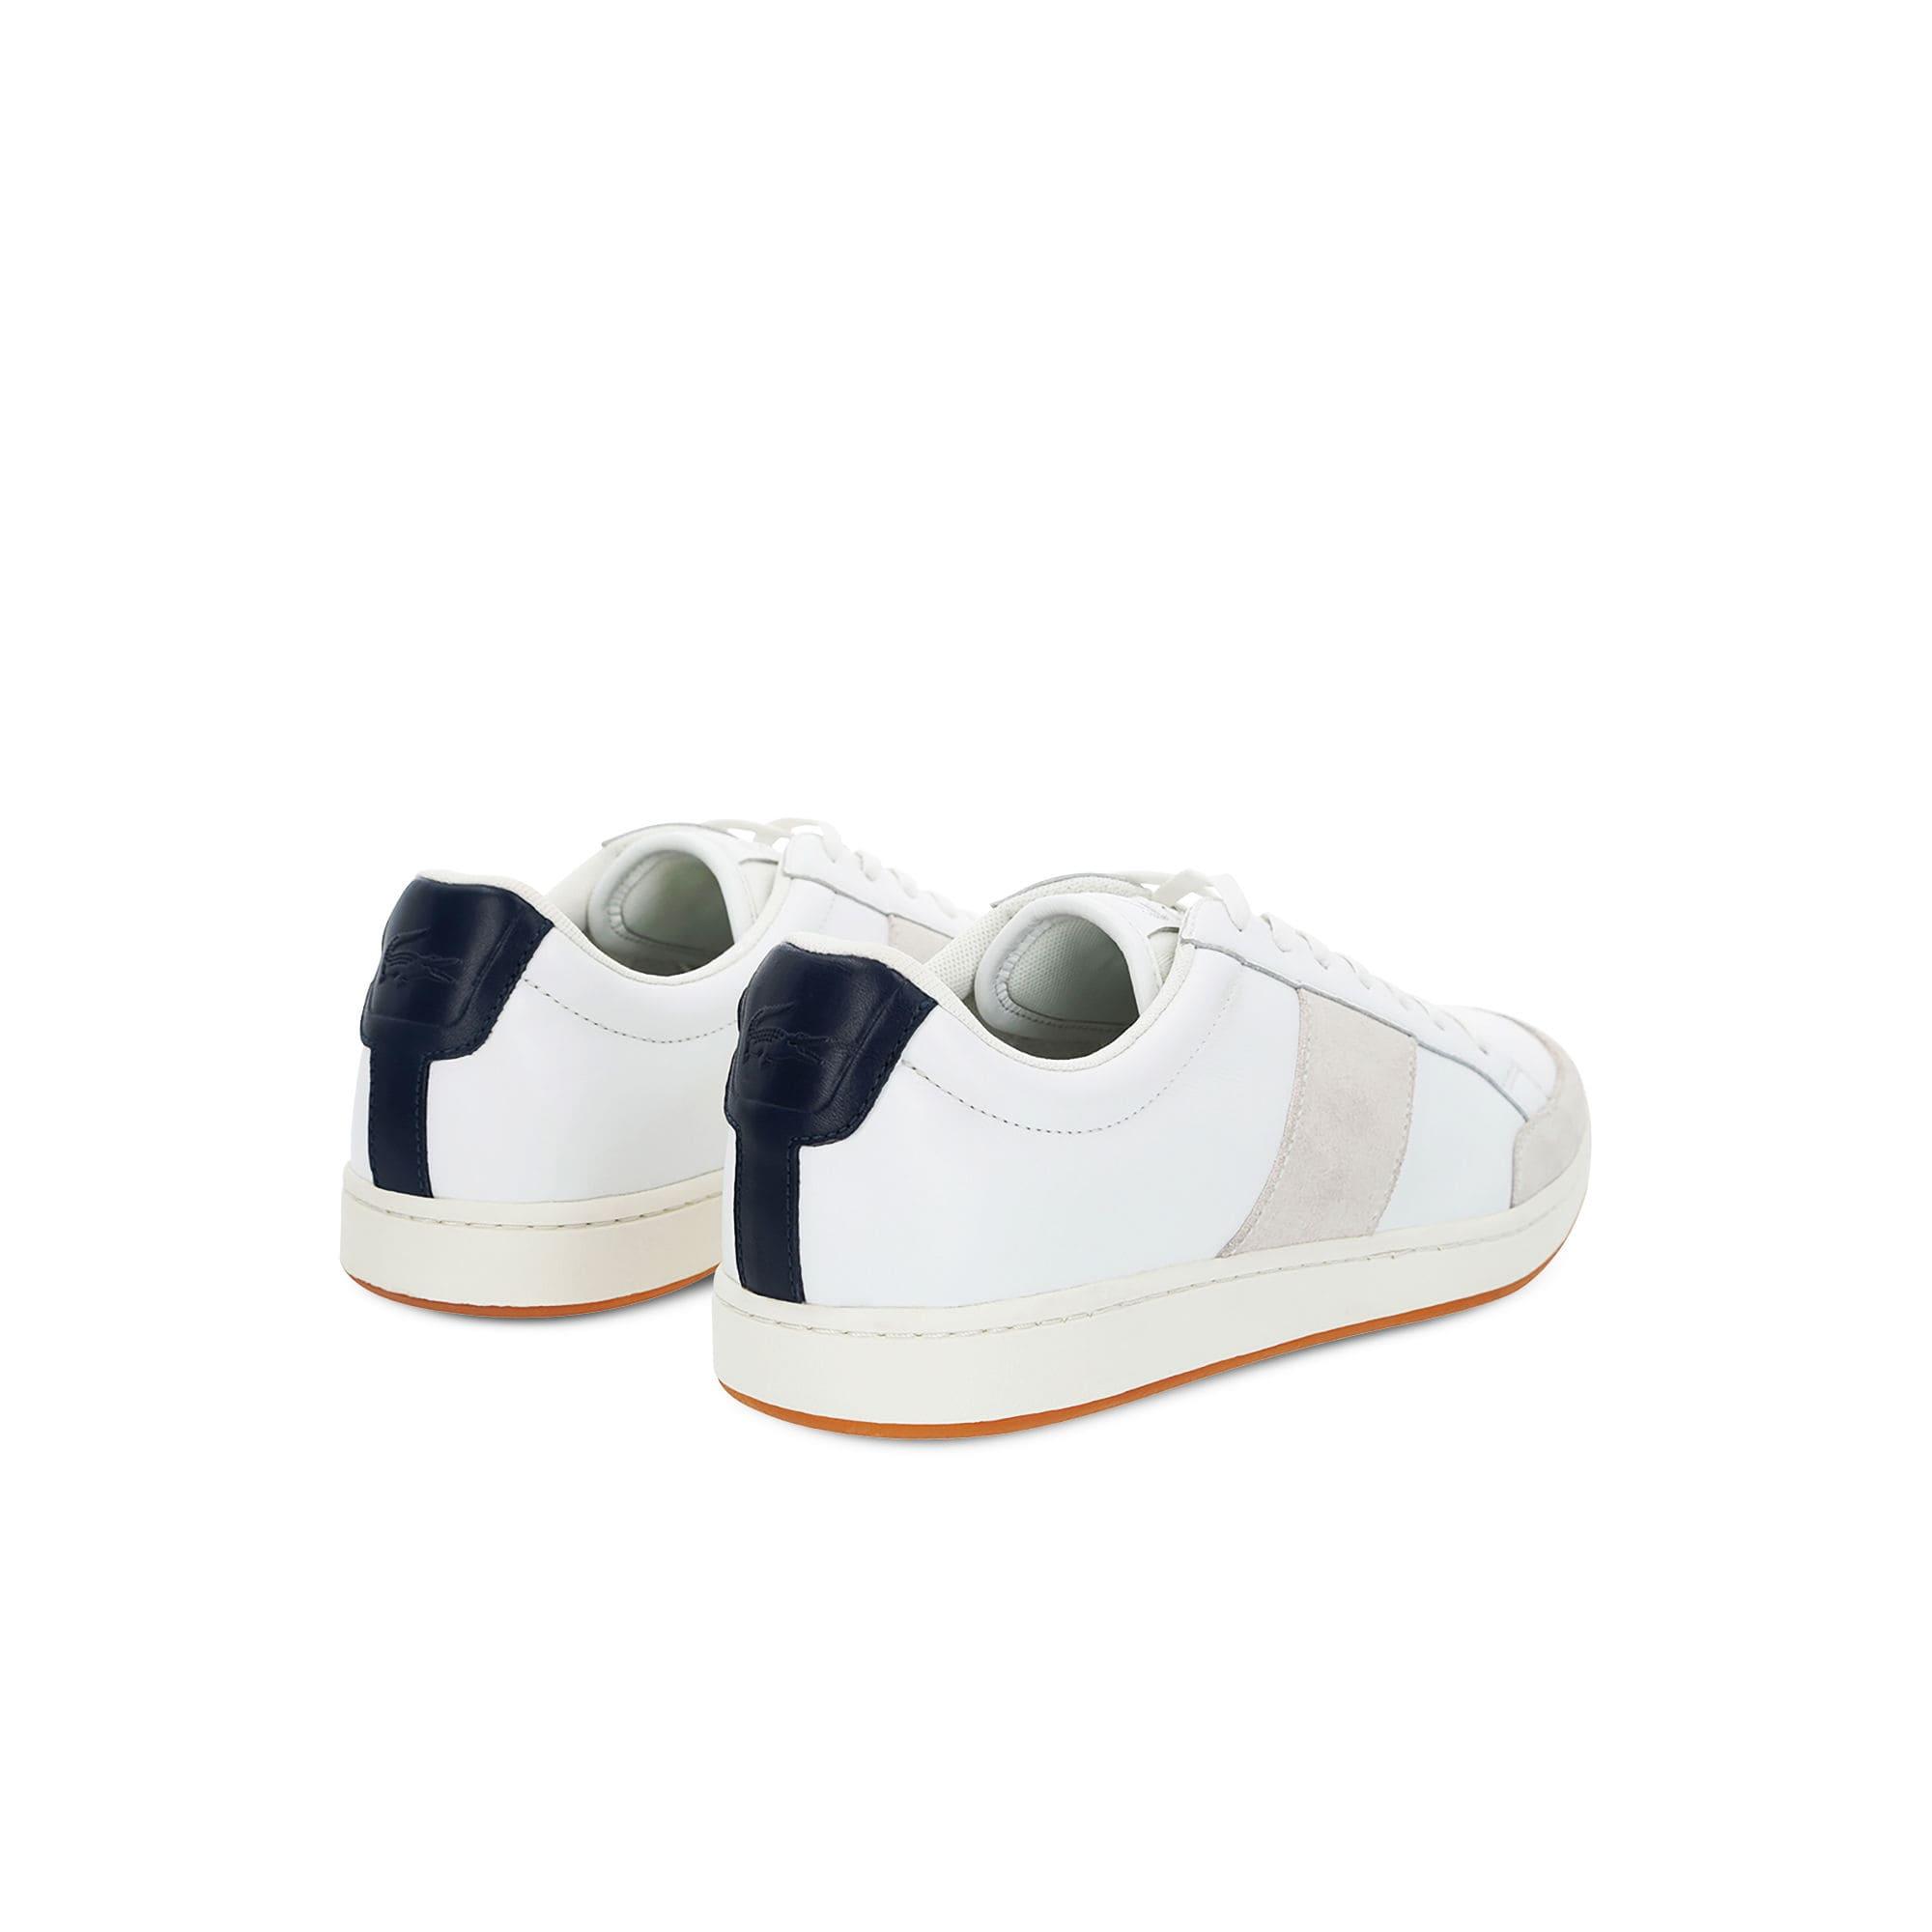 Lacoste Carnaby Sneaker in White for Men - Lyst